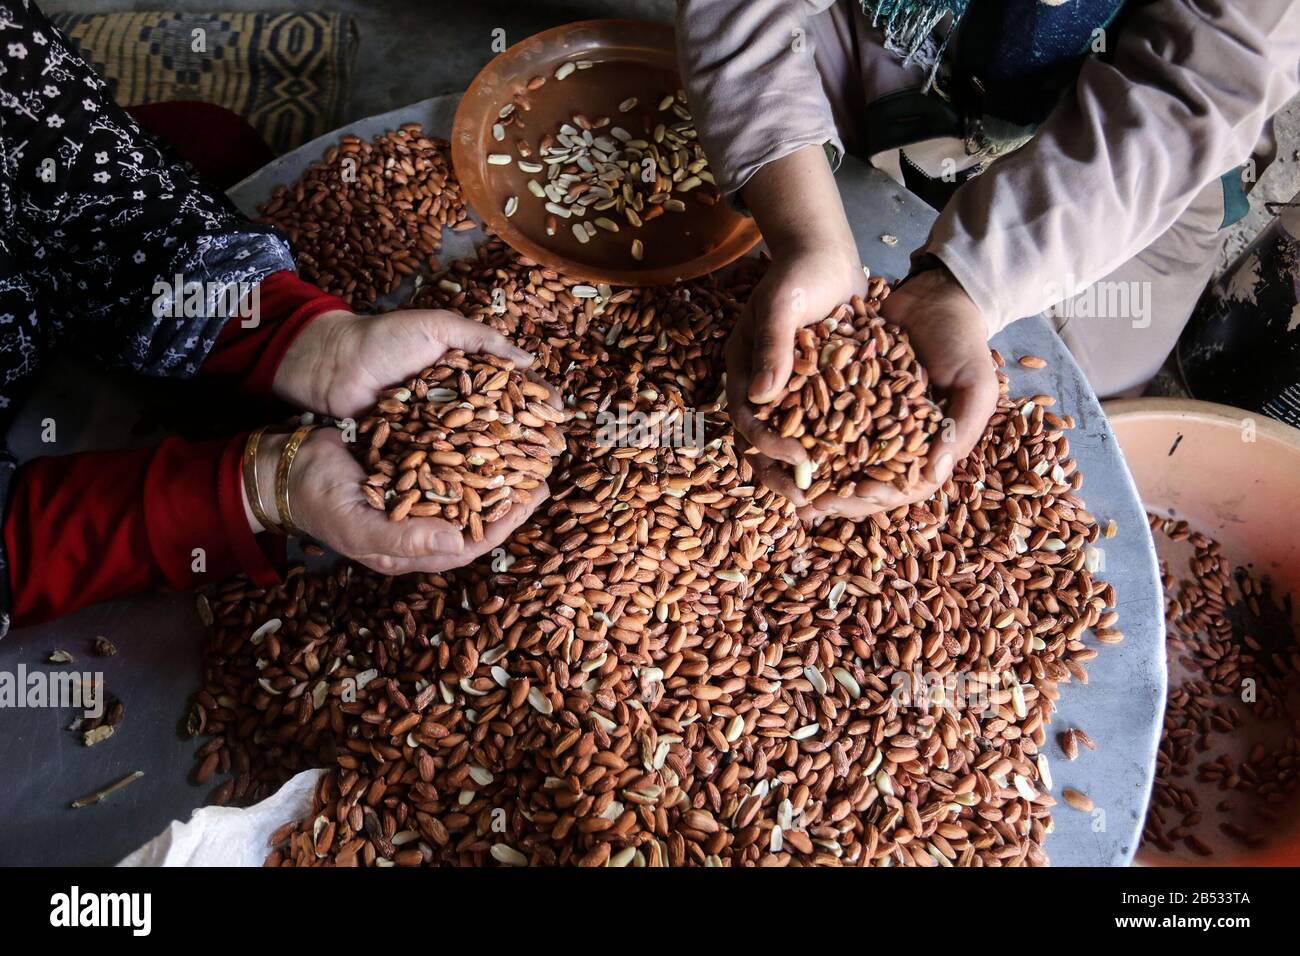 Palestinian women working in a peanut factory, 'Pistachio', tomorrow will be International Women's Day in Gaza Strip, on March 7, 2020. Stock Photo